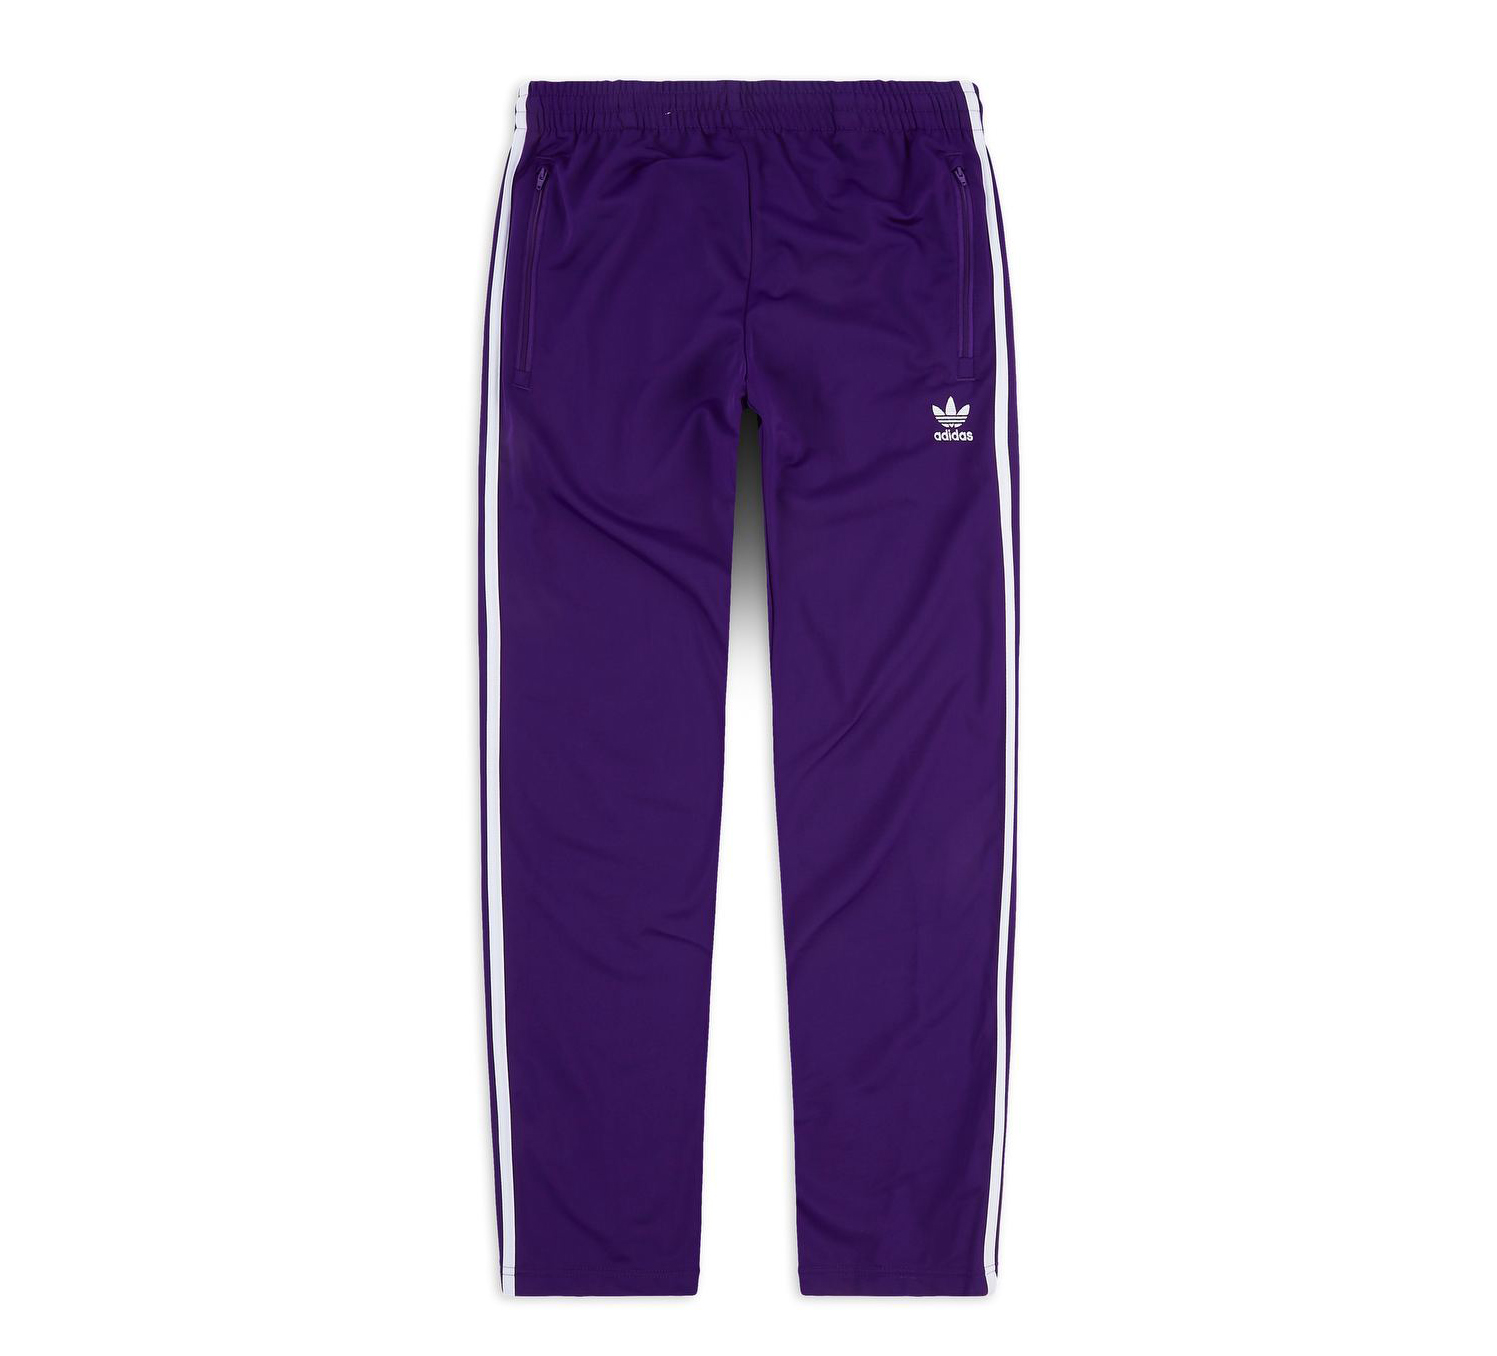 Adidas Firebird Men's Track Pants Collegiate Purple